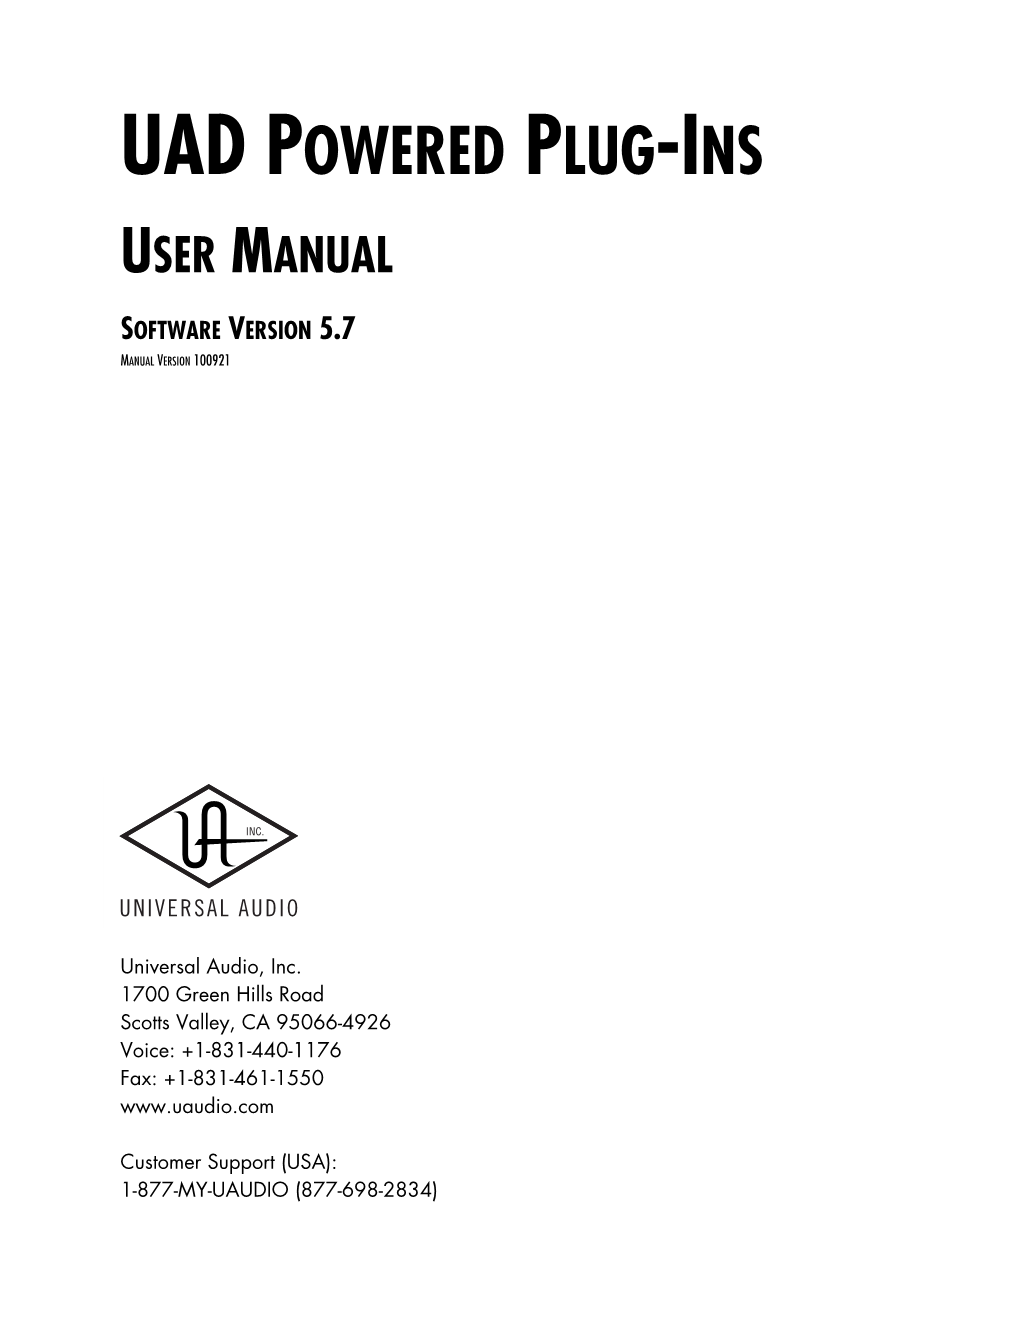 UAD Powered Plug-Ins Manual V5.7